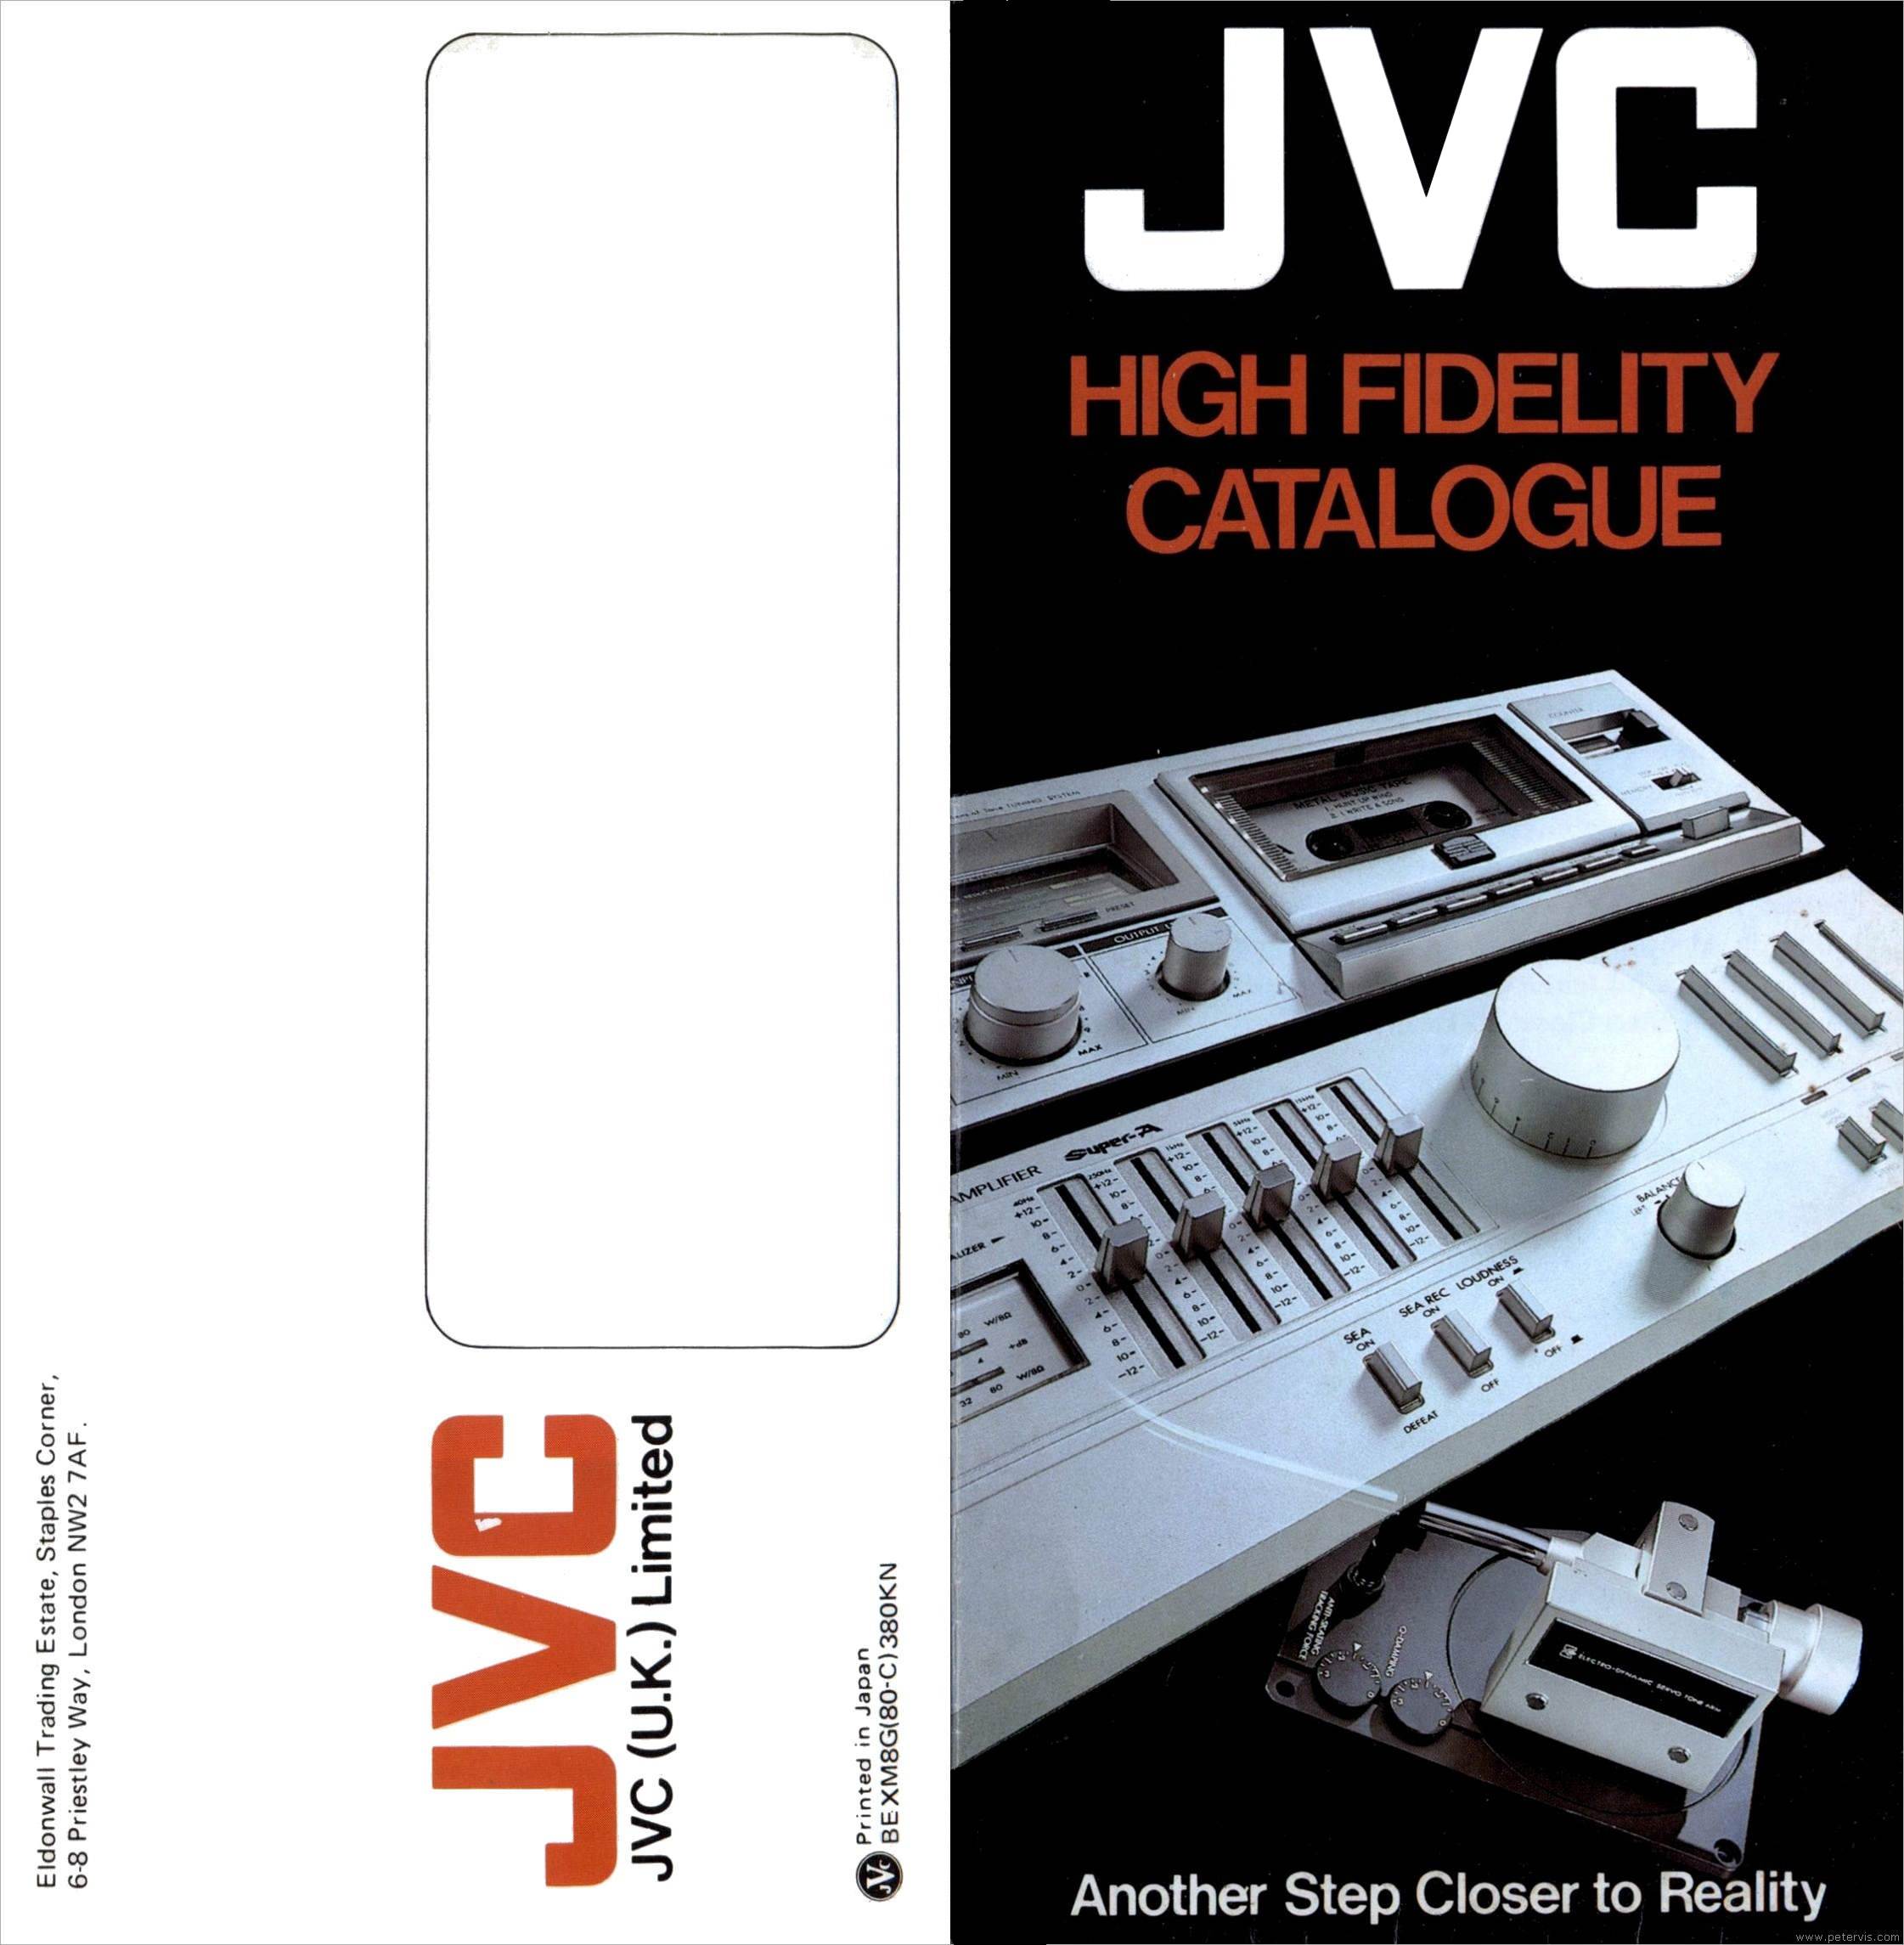 JVC High Fidelity